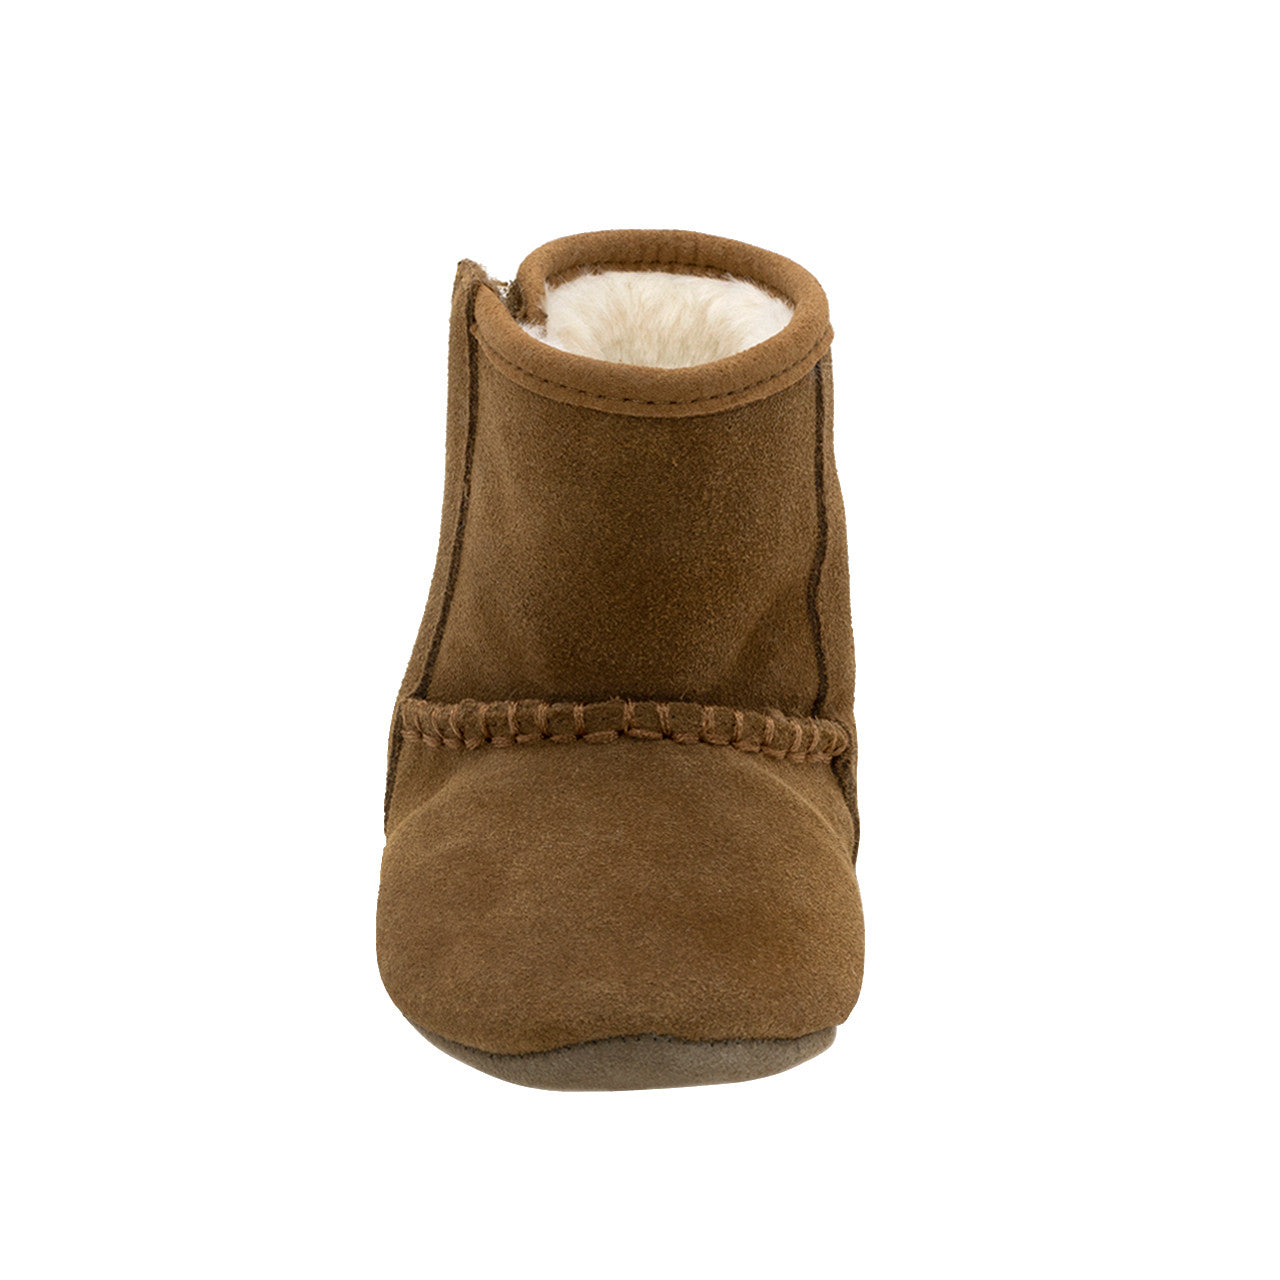 Tyler Soft Sole Boots in Camel  - Doodlebug's Children's Boutique